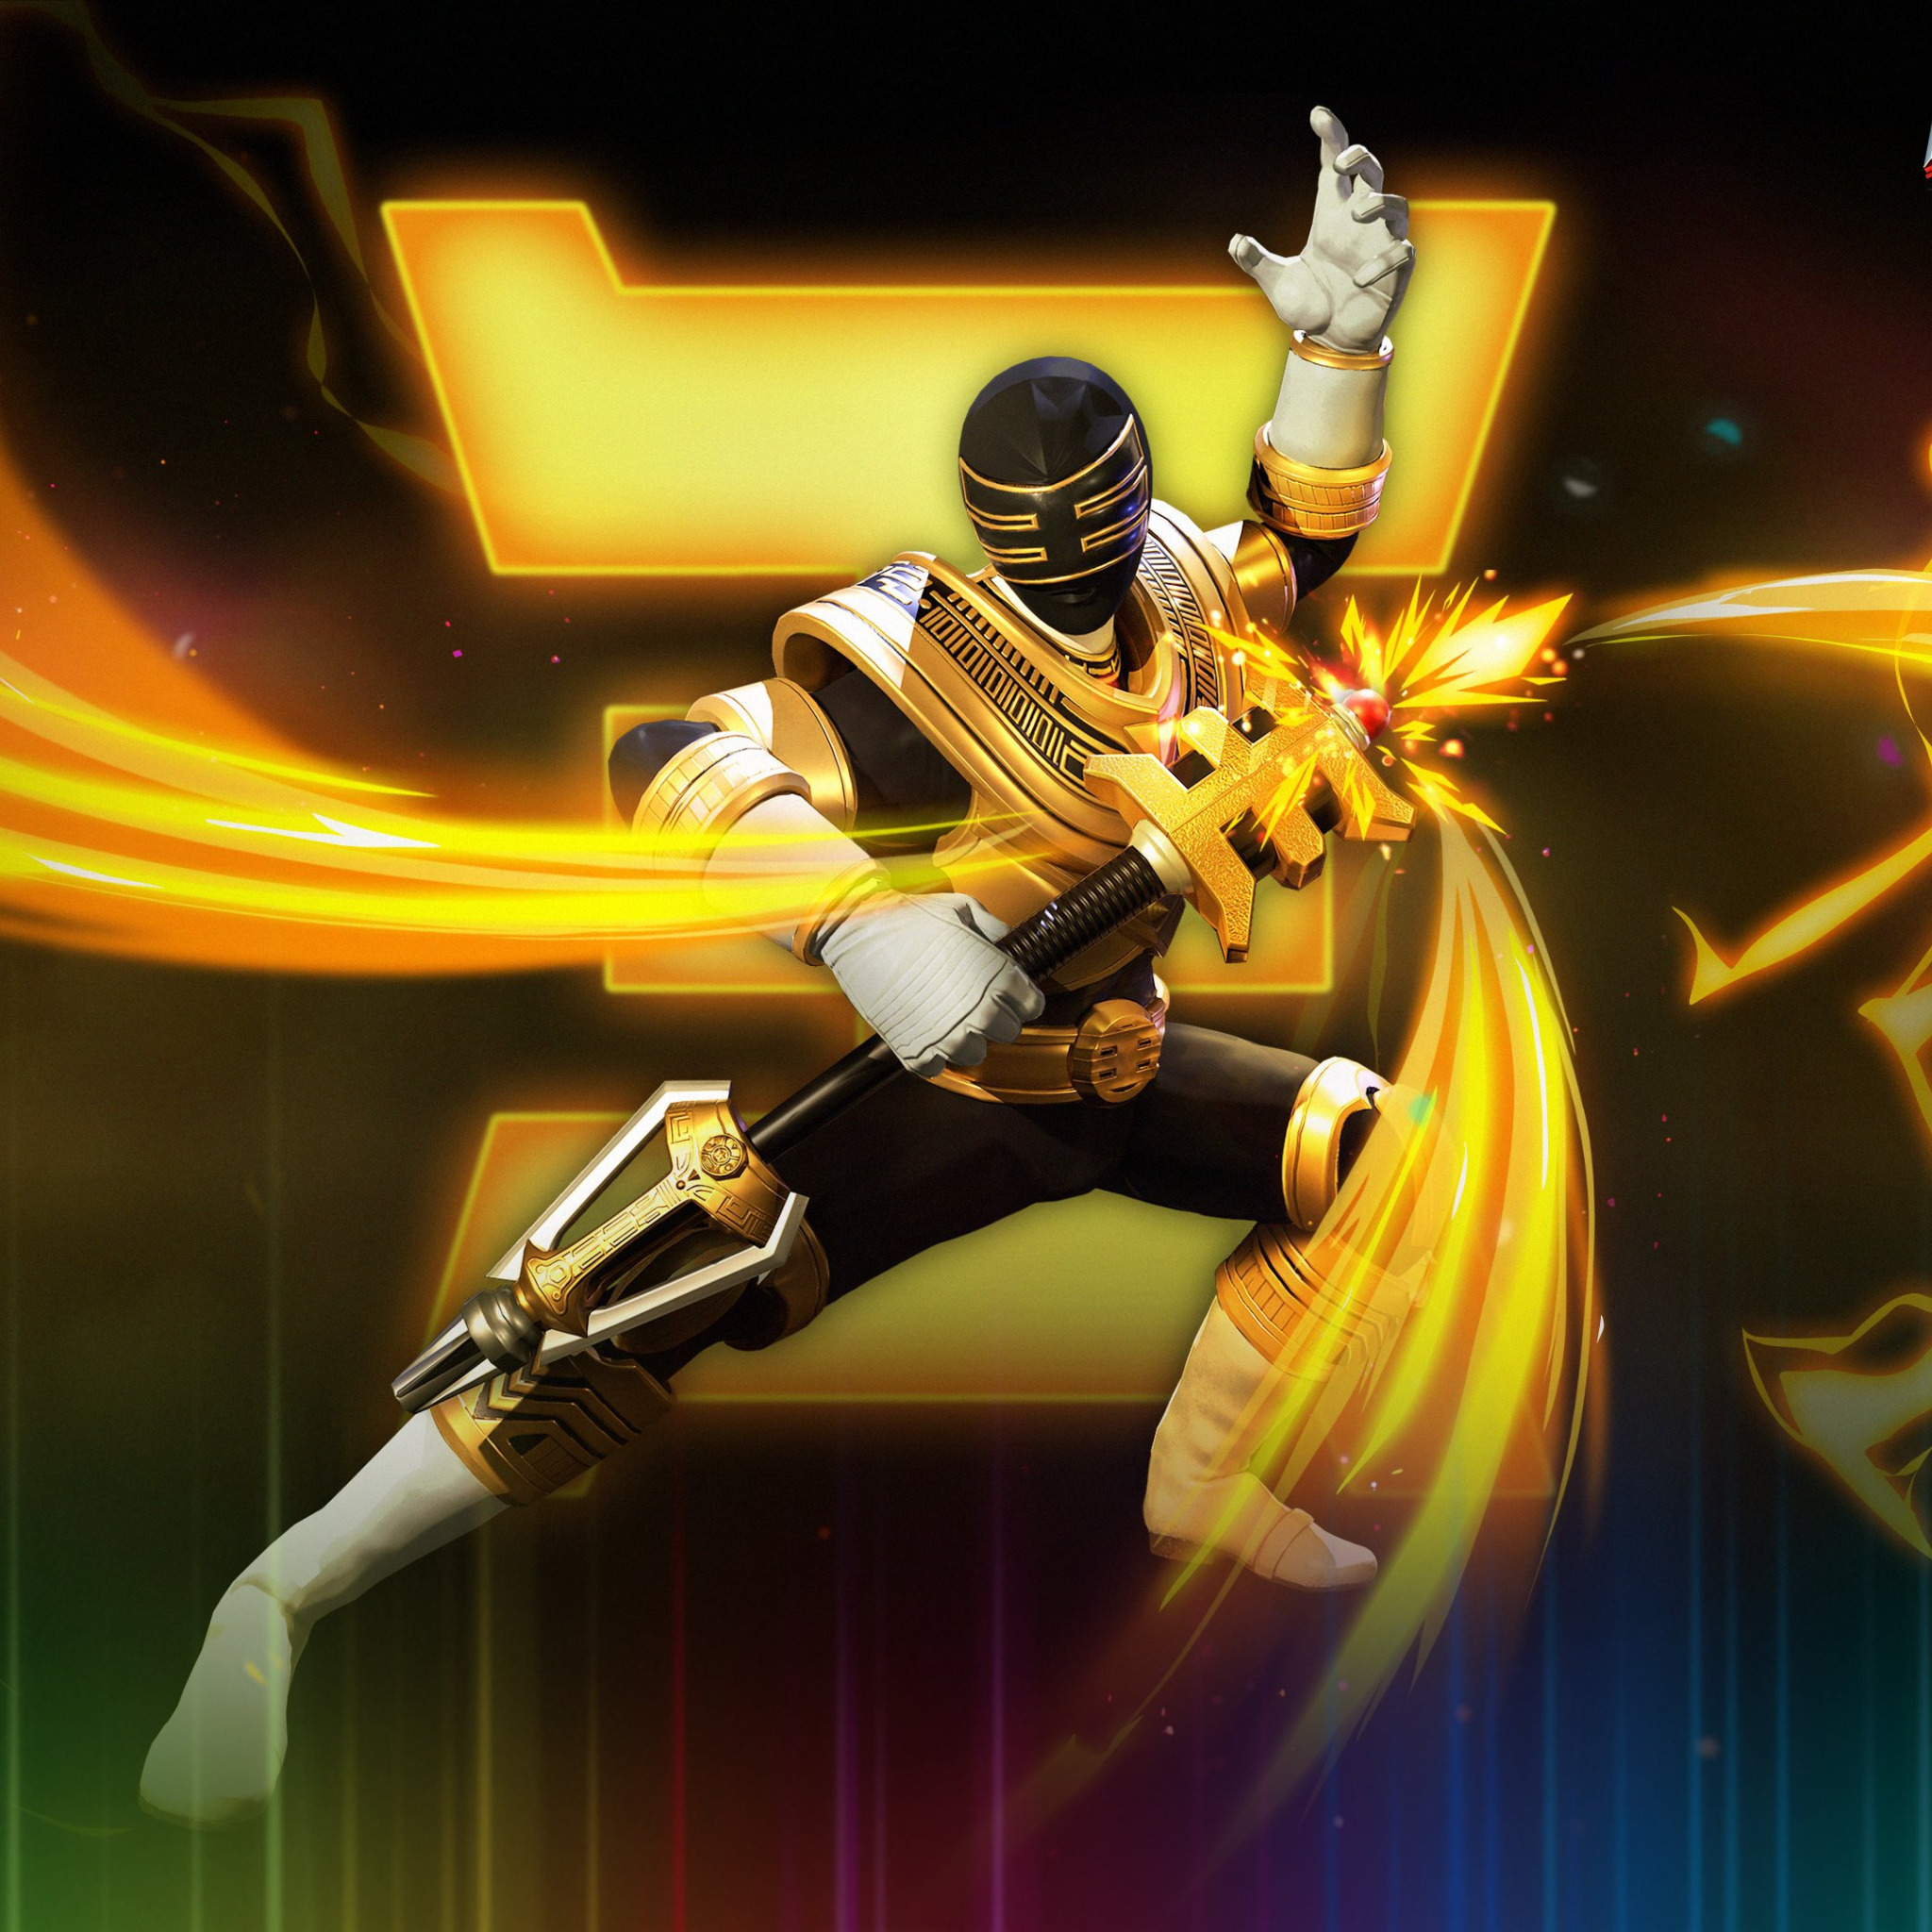 Пауэр голд. Power Rangers: Battle for the Grid. Power Gold. Обои 4 к на рабочий стол 3840x2160 игры. Power Rangers в метро.